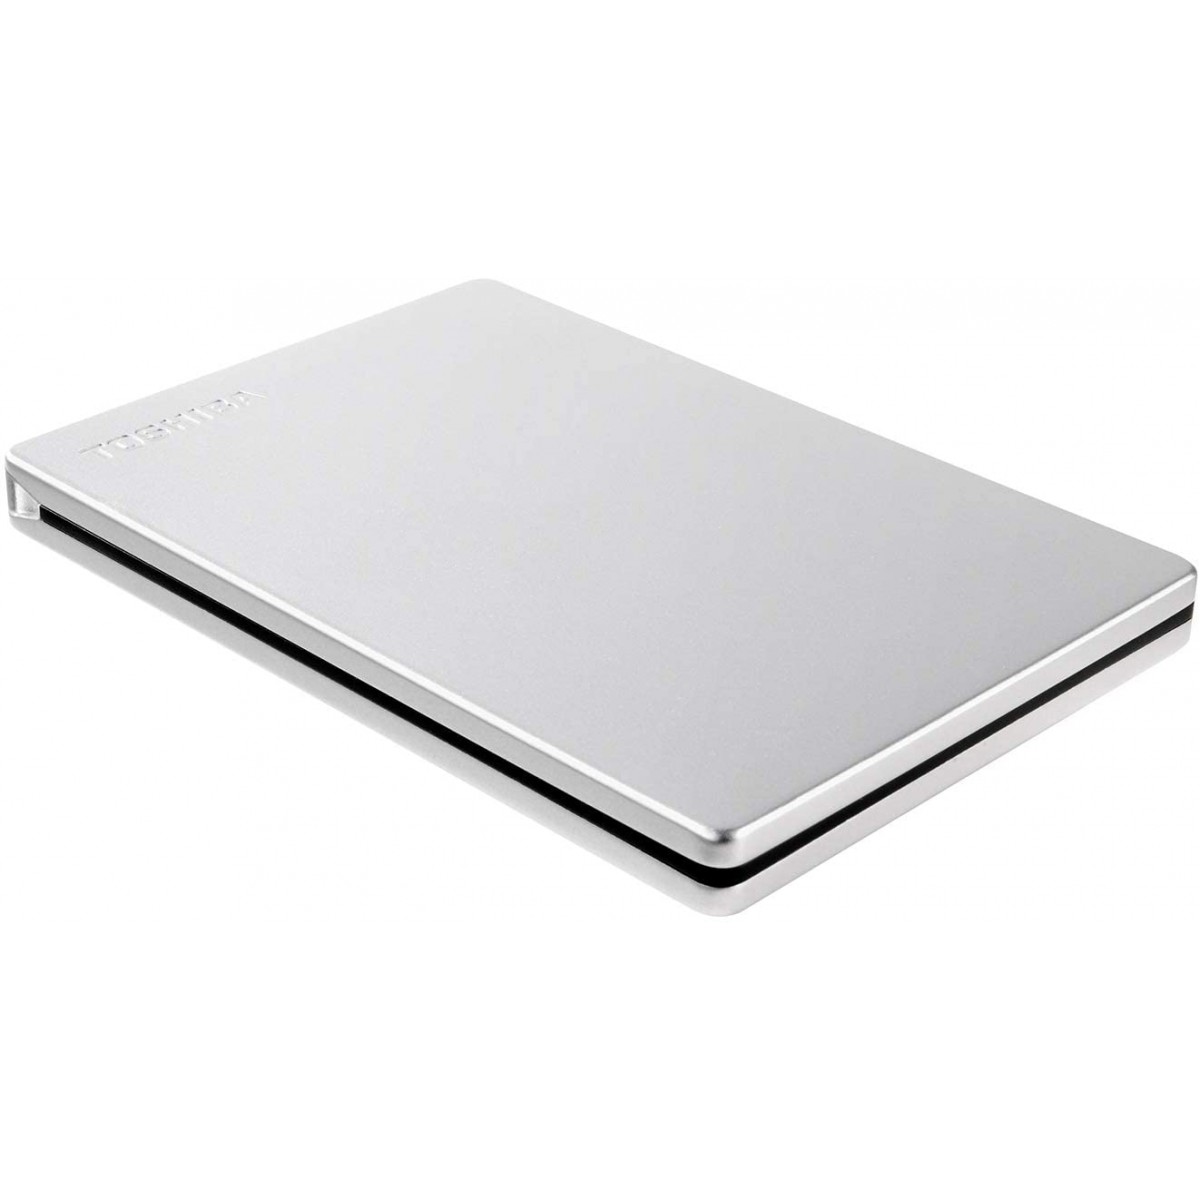 HD Externo Portátil Toshiba Canvio Slim 1TB USB 3.0, Silver, HDTD310XS3DA